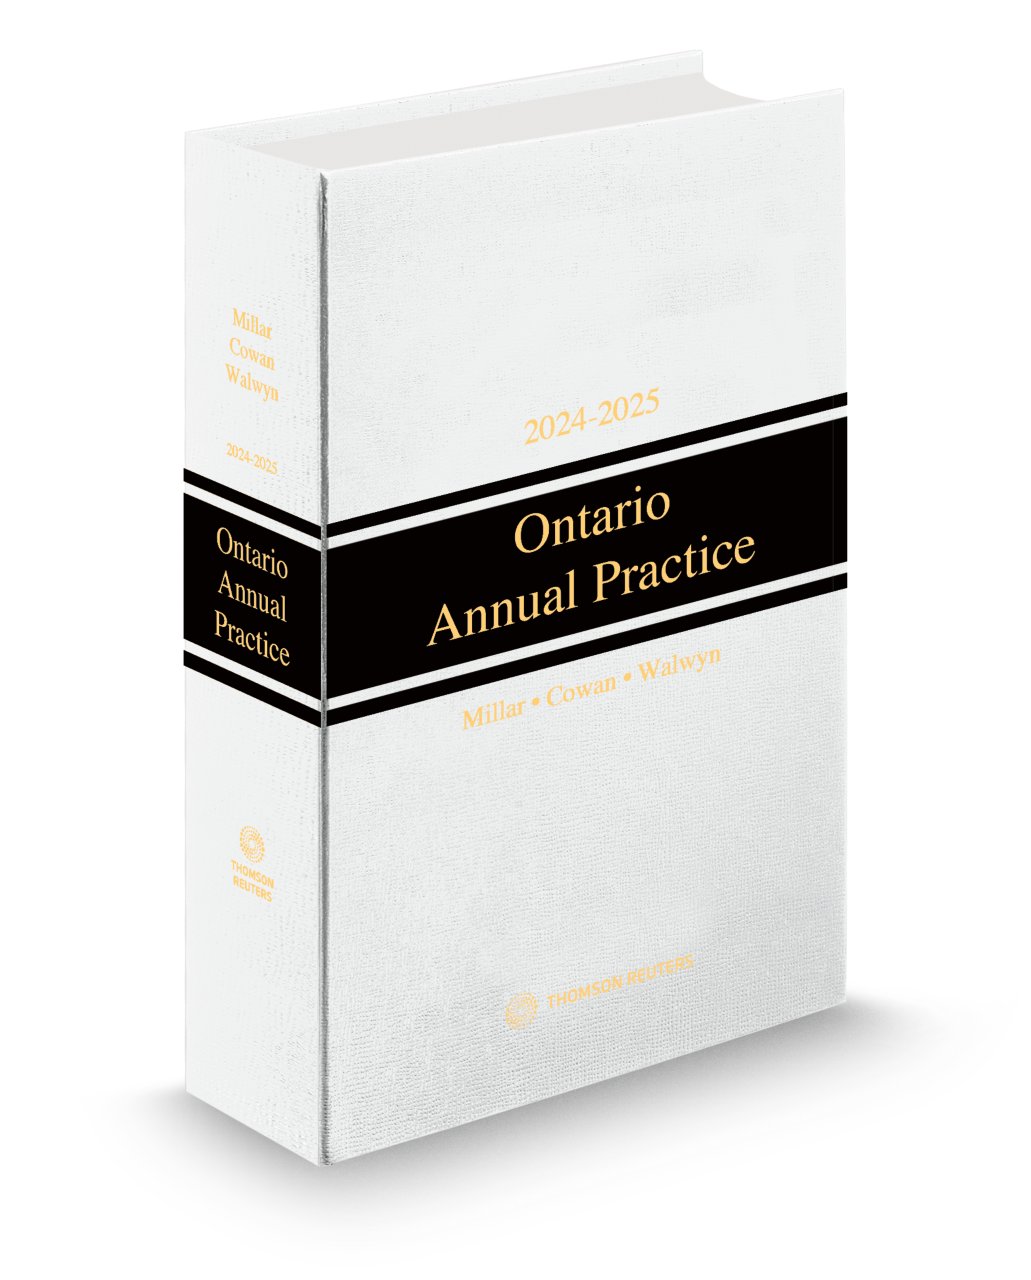 Ontario Annual Practice 2024-2025 - New Edition